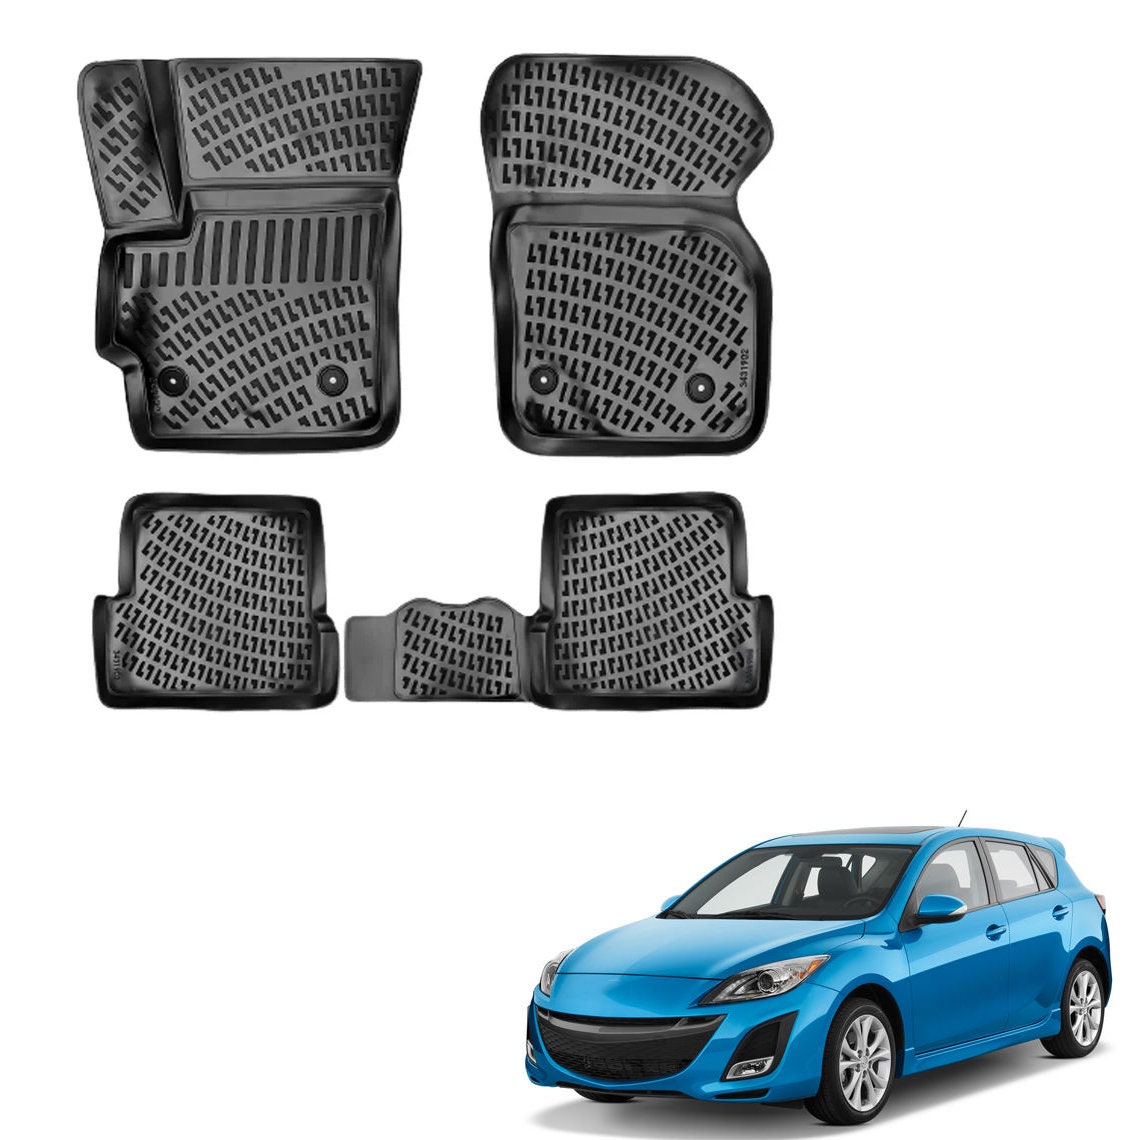 Accessories Fit For Mazda 3 M3 Bl Hatchback 2009-2013 Boot Liner